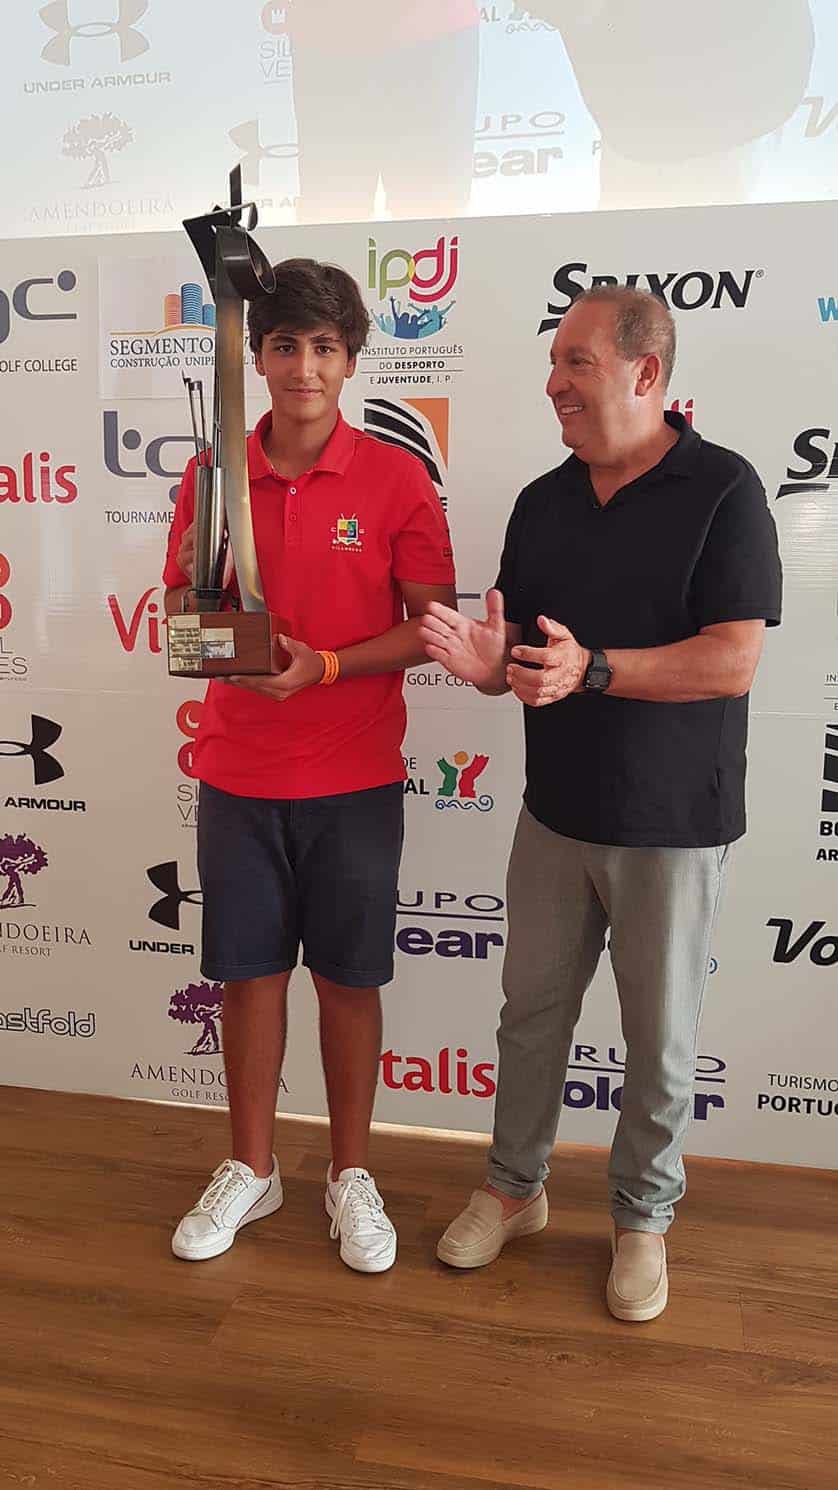 João Crasi Alves, le champion, a reçu la coupe du Custódio Moreno, de l'IPDJ Algarve, photo de Carlos Alves de Sousa